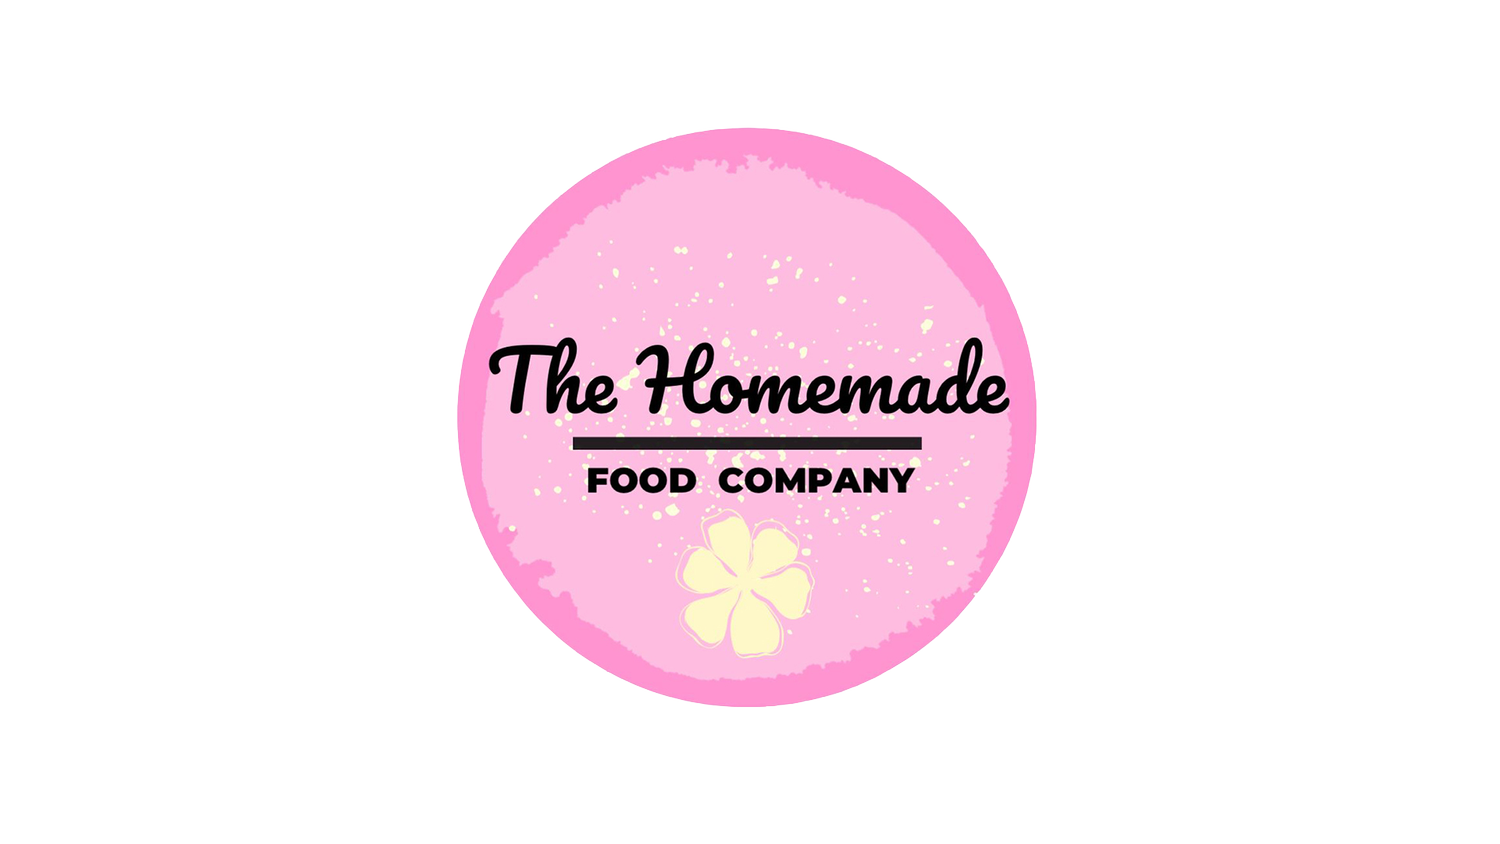 The Homemadefood company